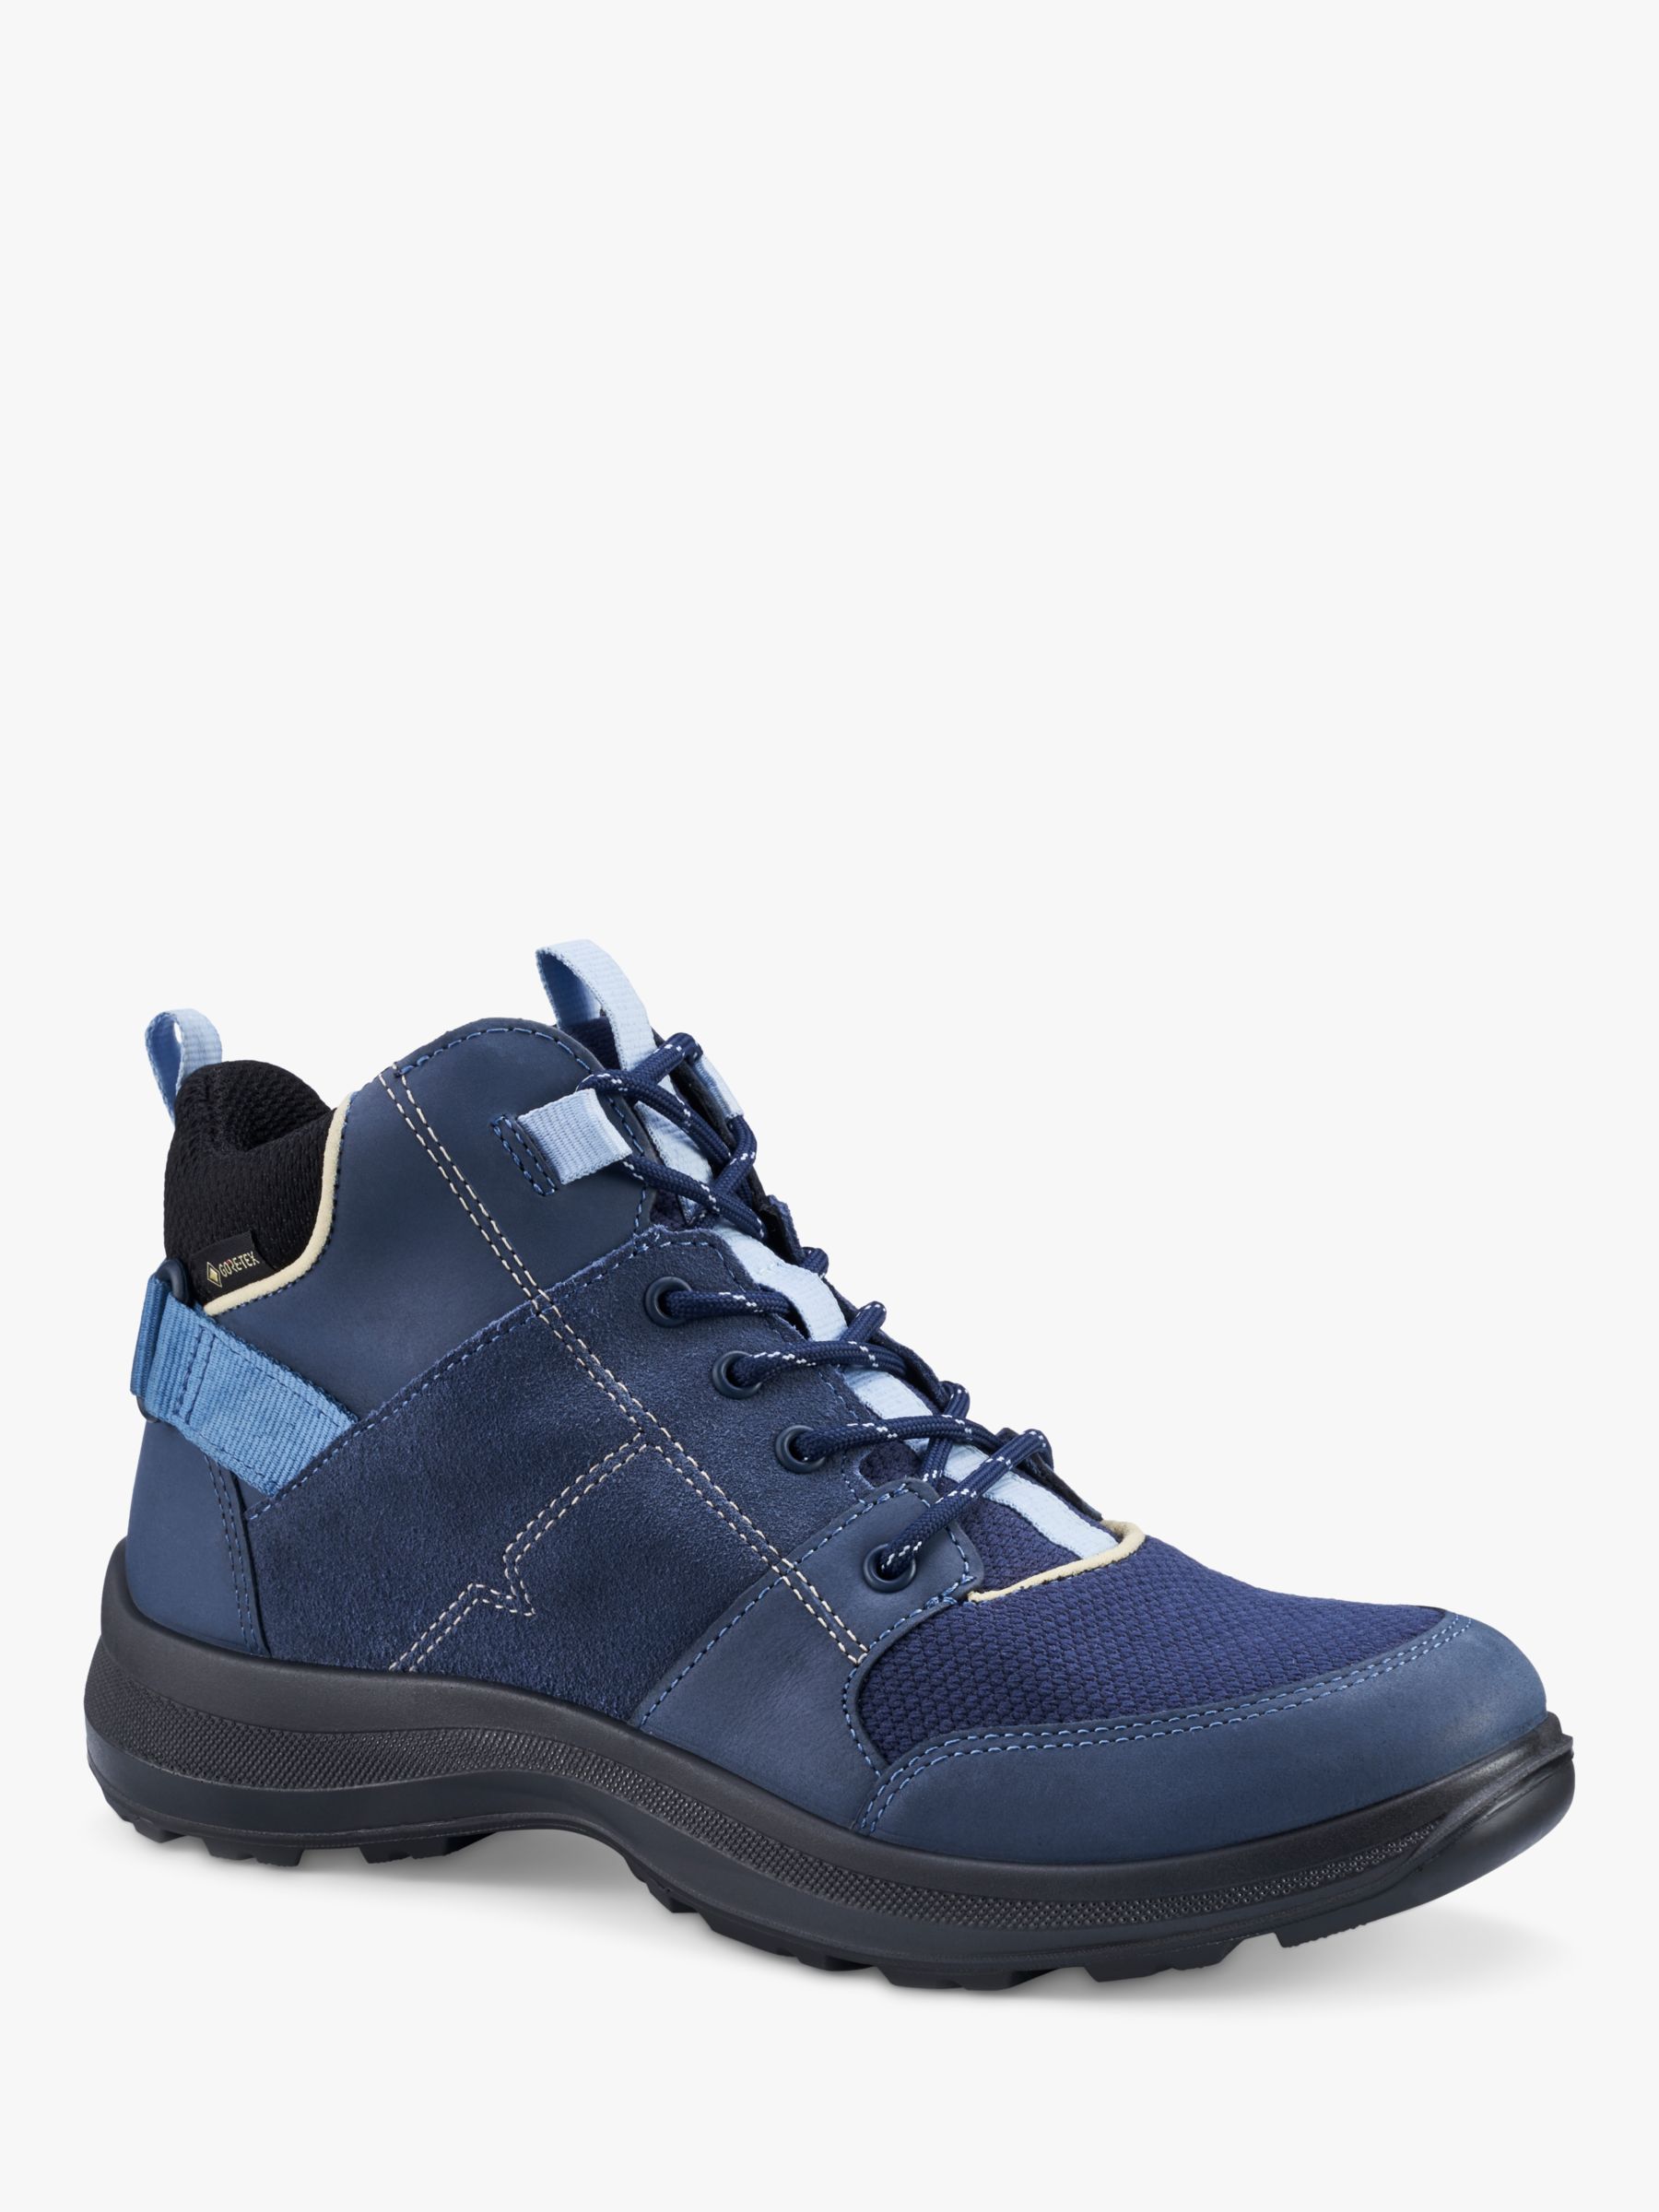 Buy Hotter Trail Adjustable Goretex Walking Boots Online at johnlewis.com